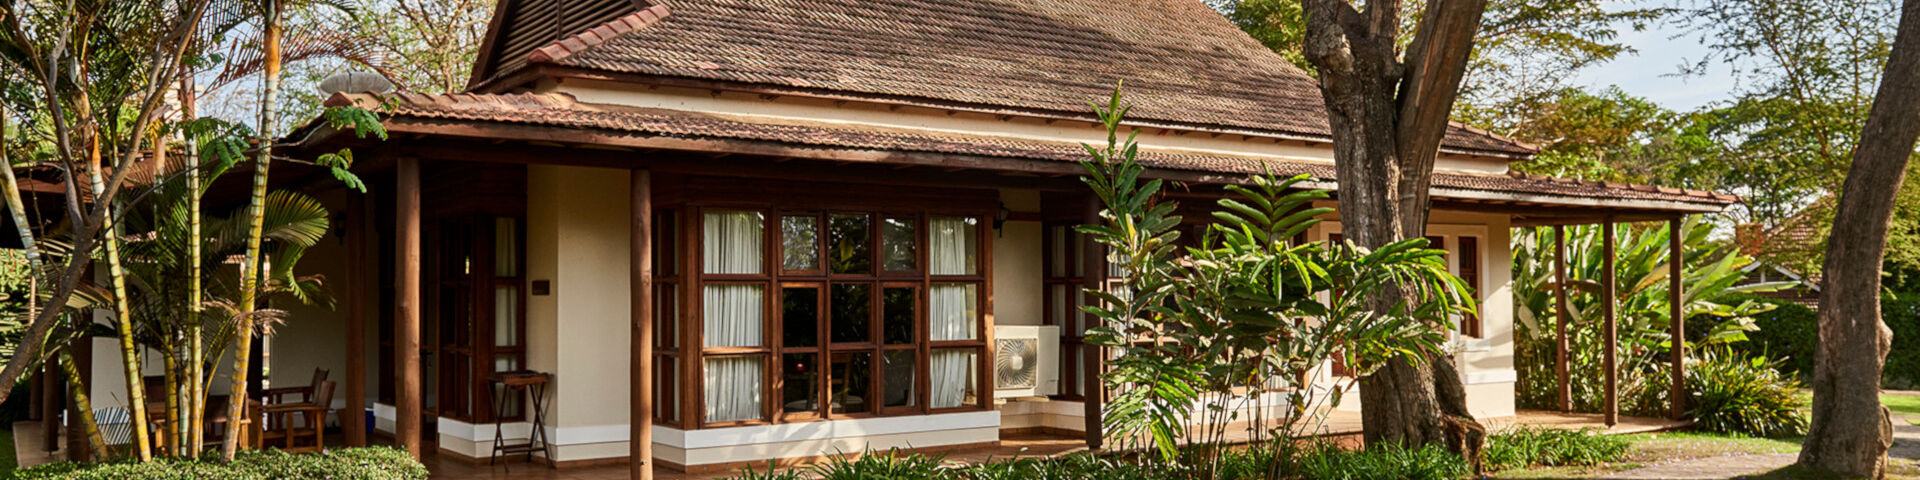 Accommodation in Arusha Tanzania Legendary Lodge Cottage